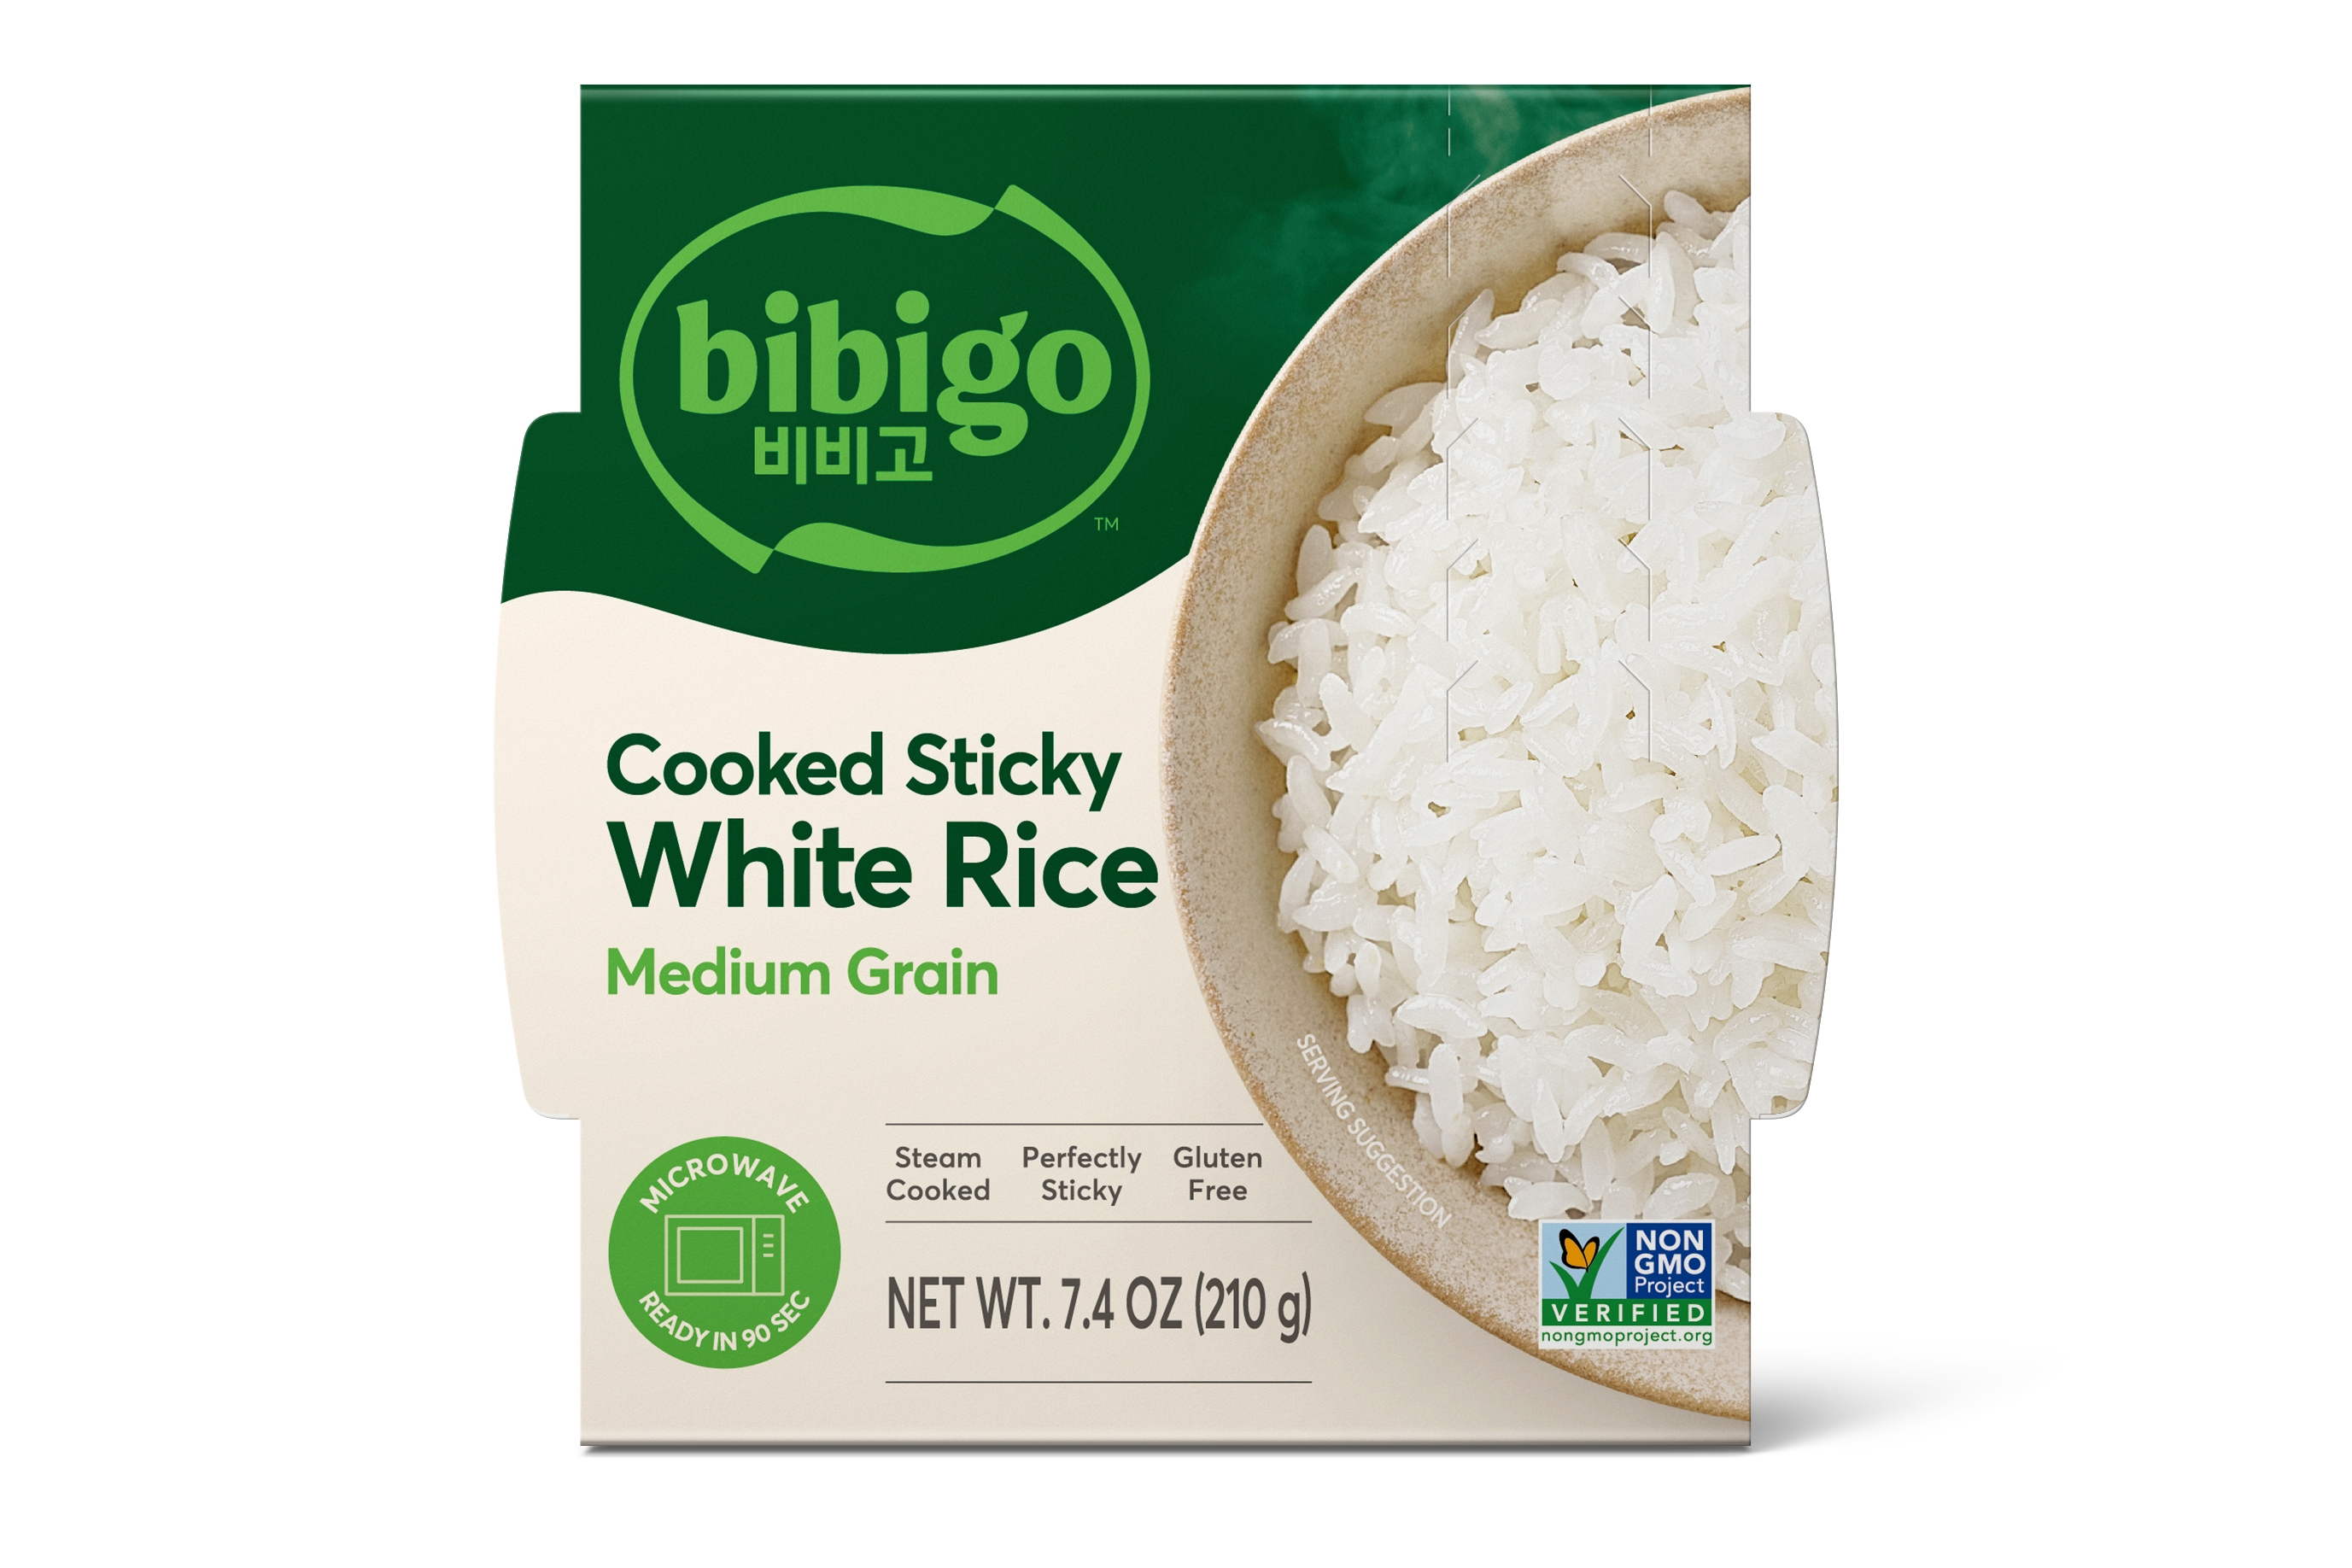 CJ제일제당이 북미에 수출하고 있는 'bibigo Sticky Rice' 제품 이미지